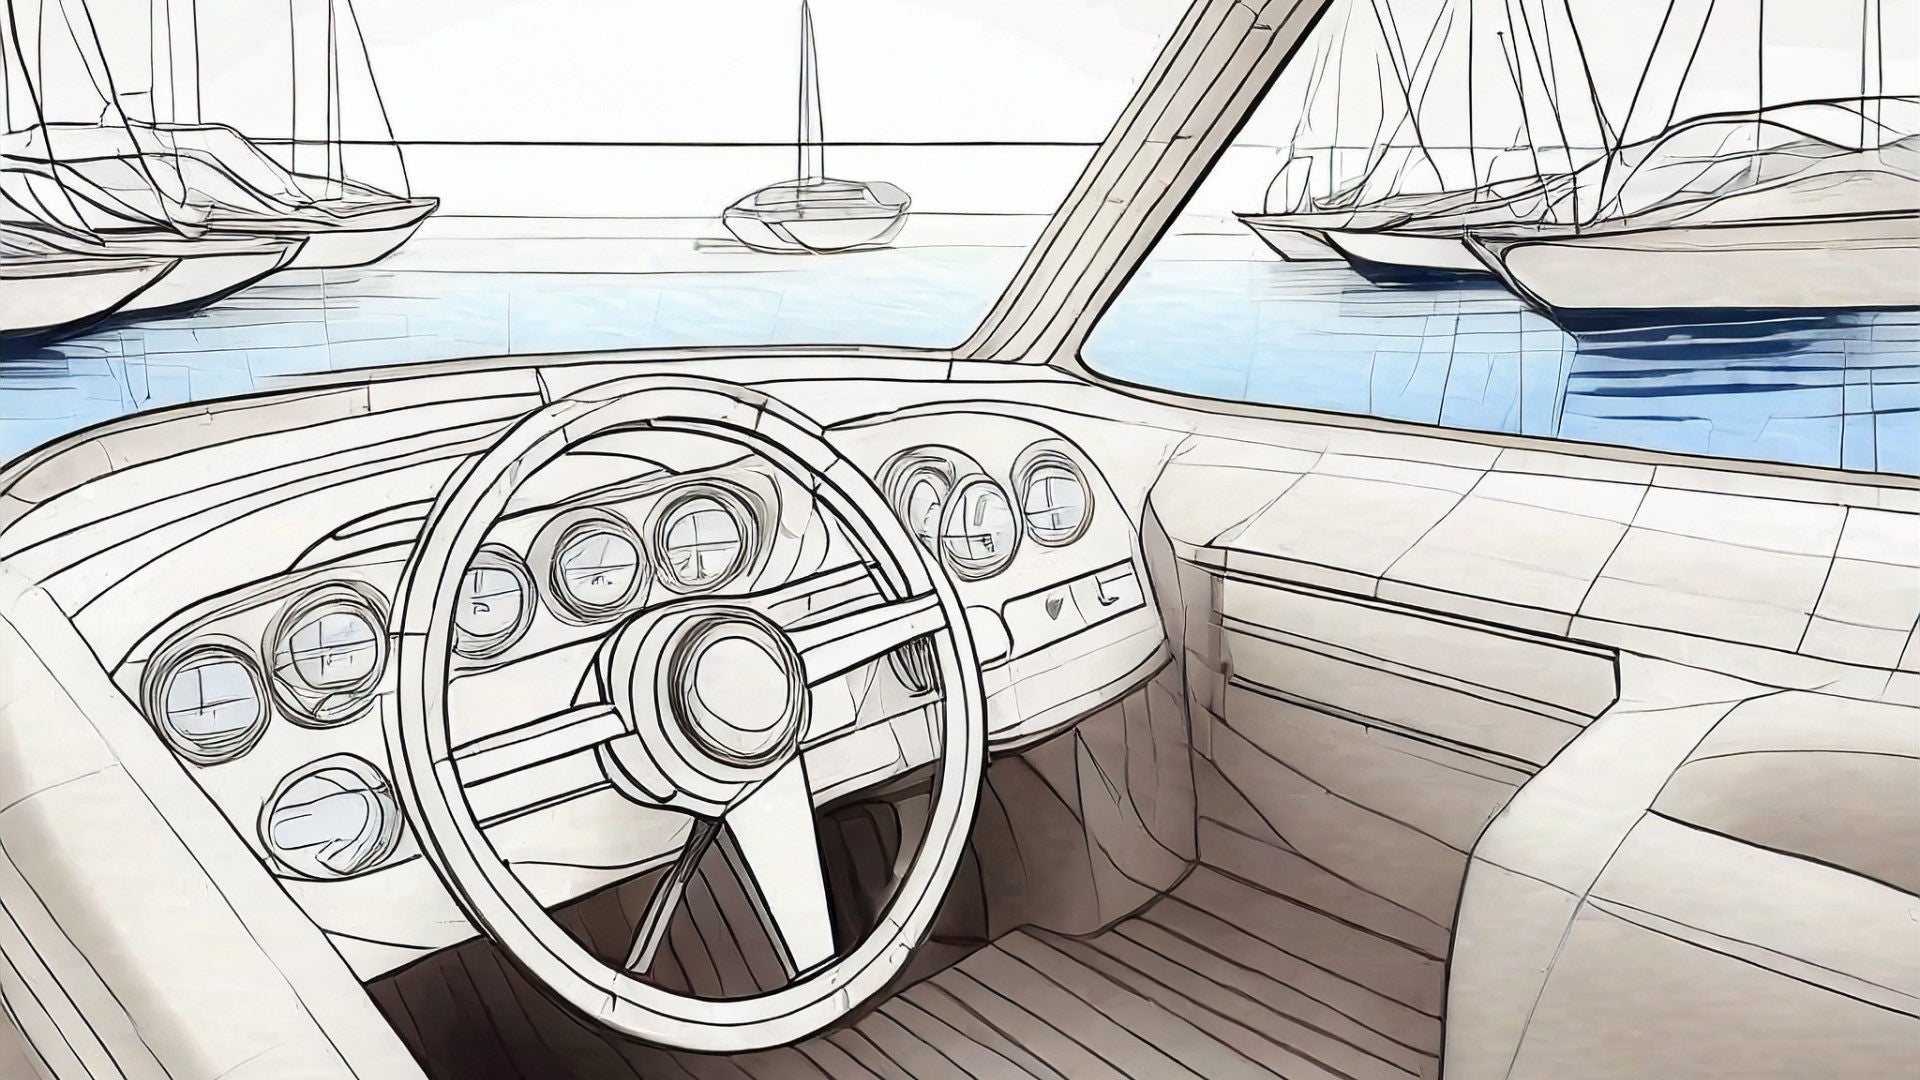 Drawing of boat interior